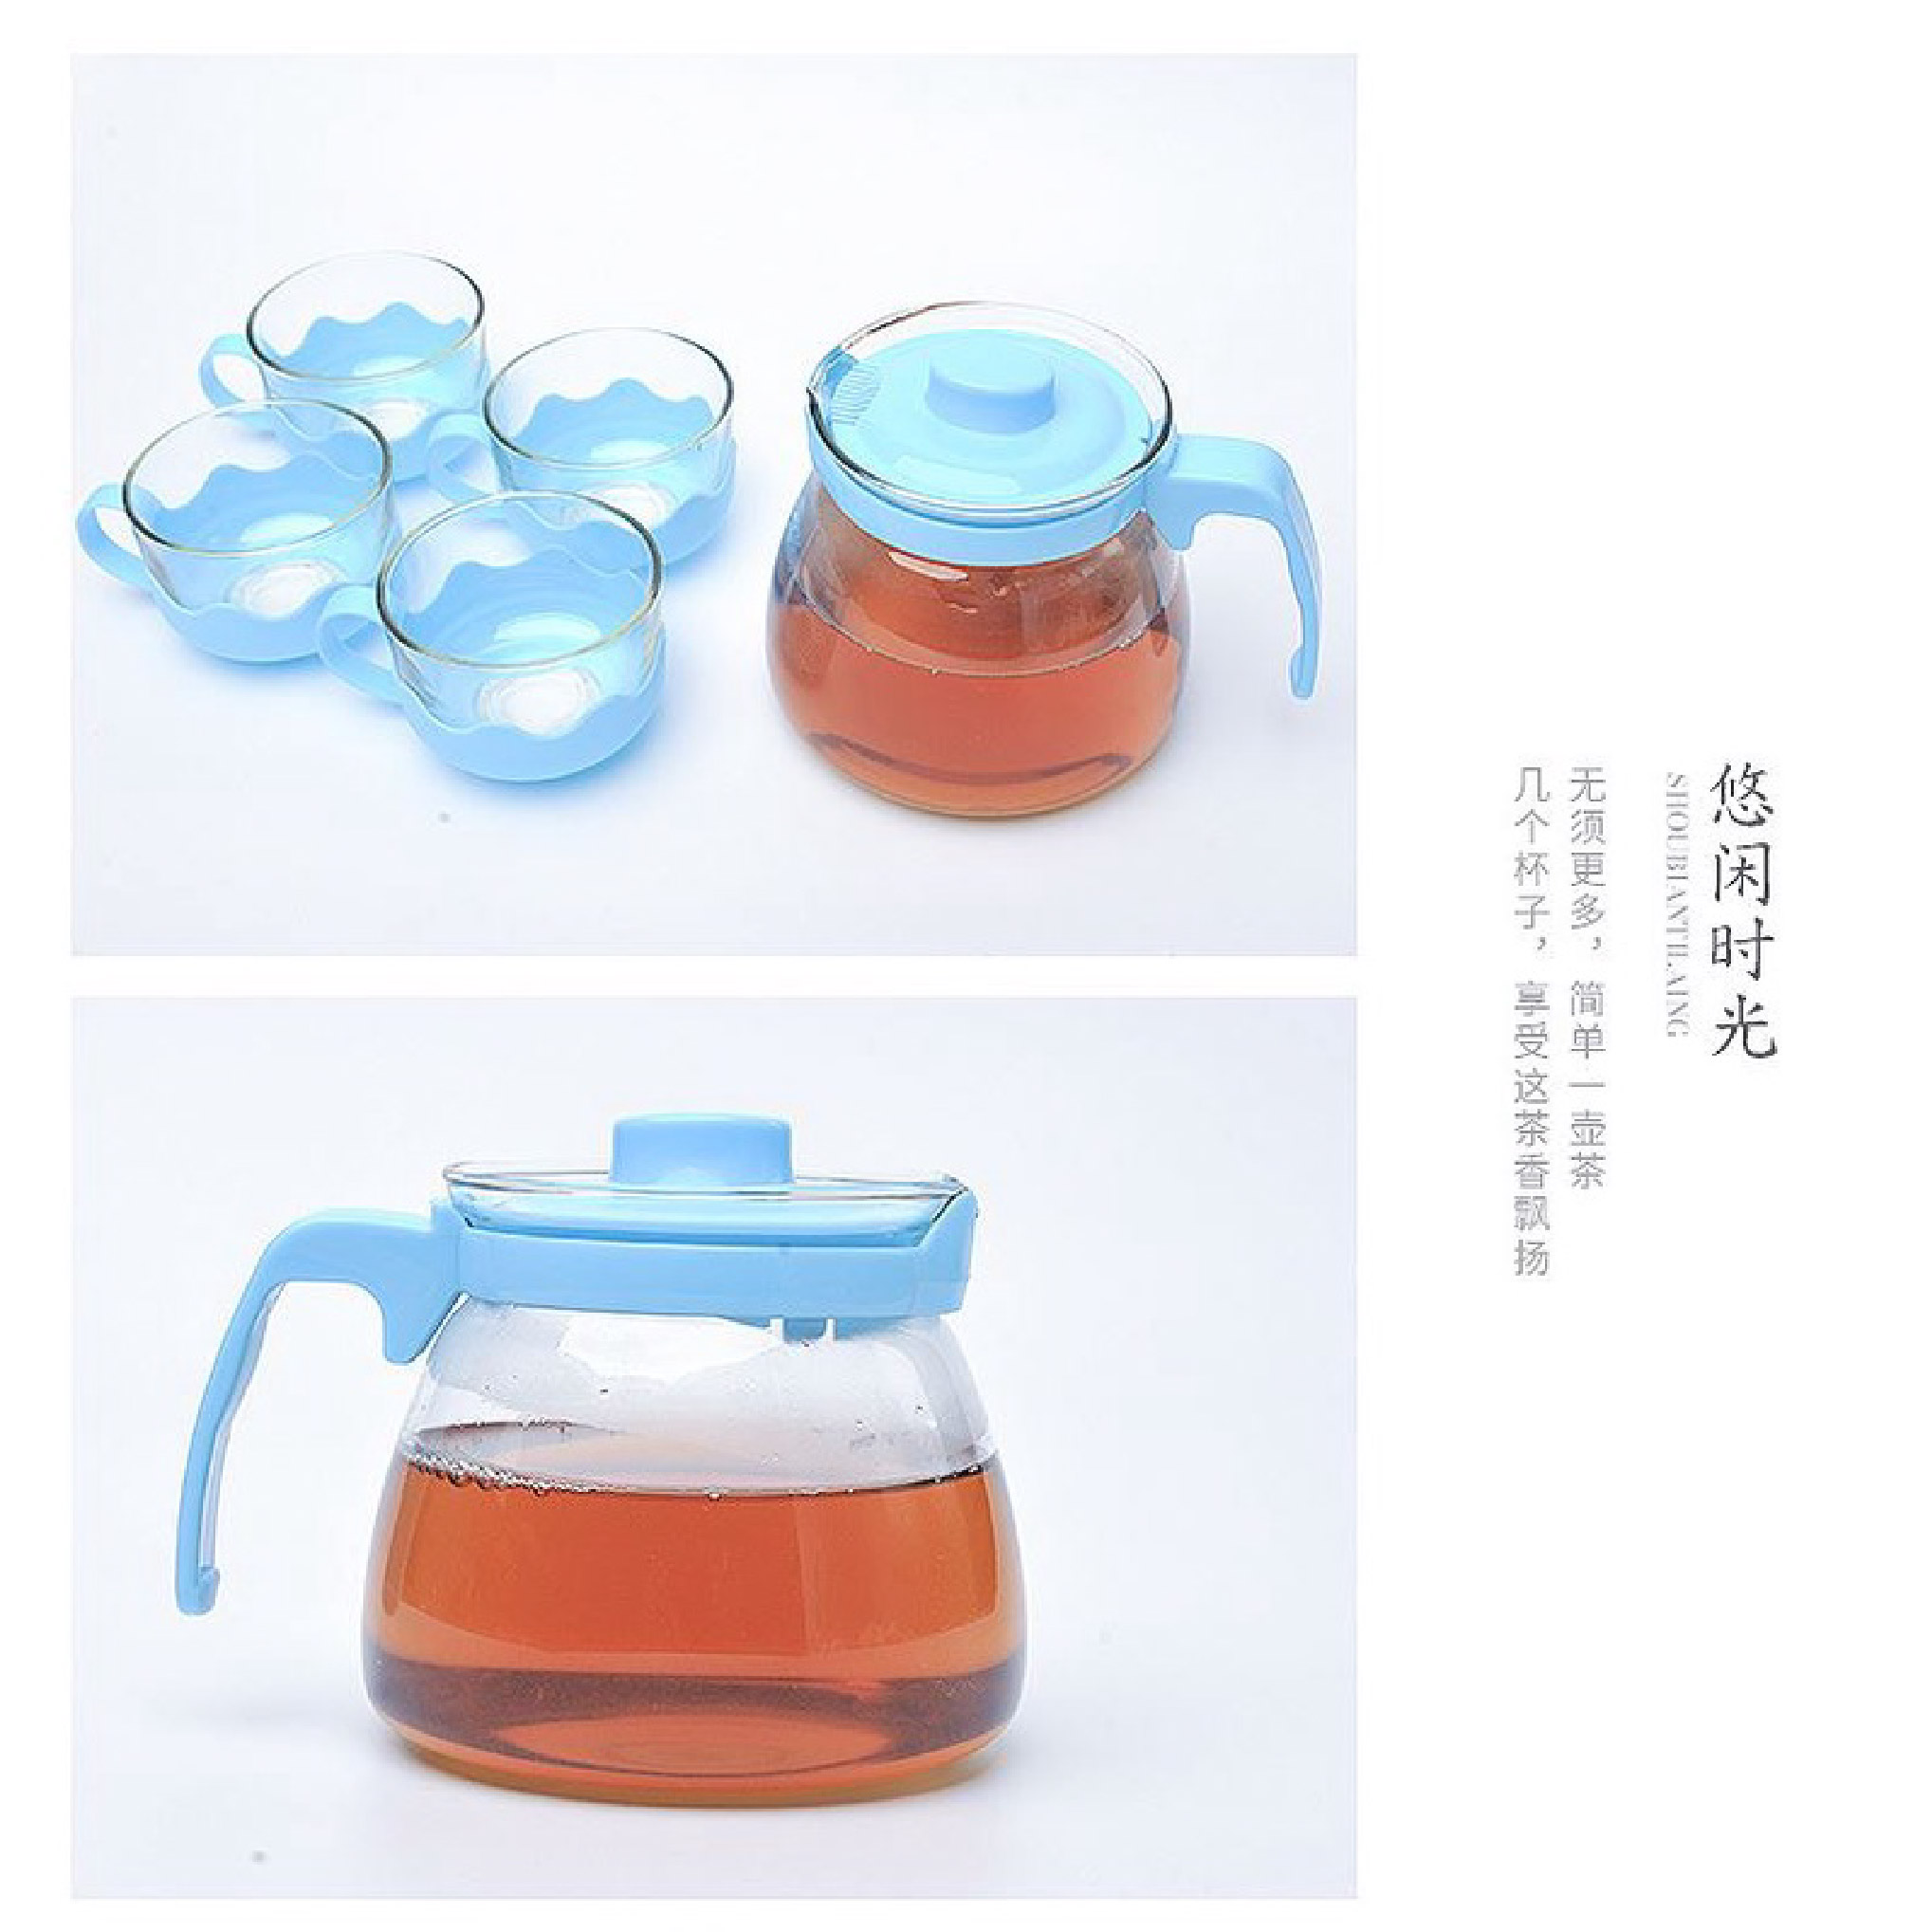 &#32784;&#28909;&#29627;&#29827;&#27873;&#33590;&#22774;&#33590;&#20855;&#22871;/ Heat-Resistant Glass Teapot Tea Set